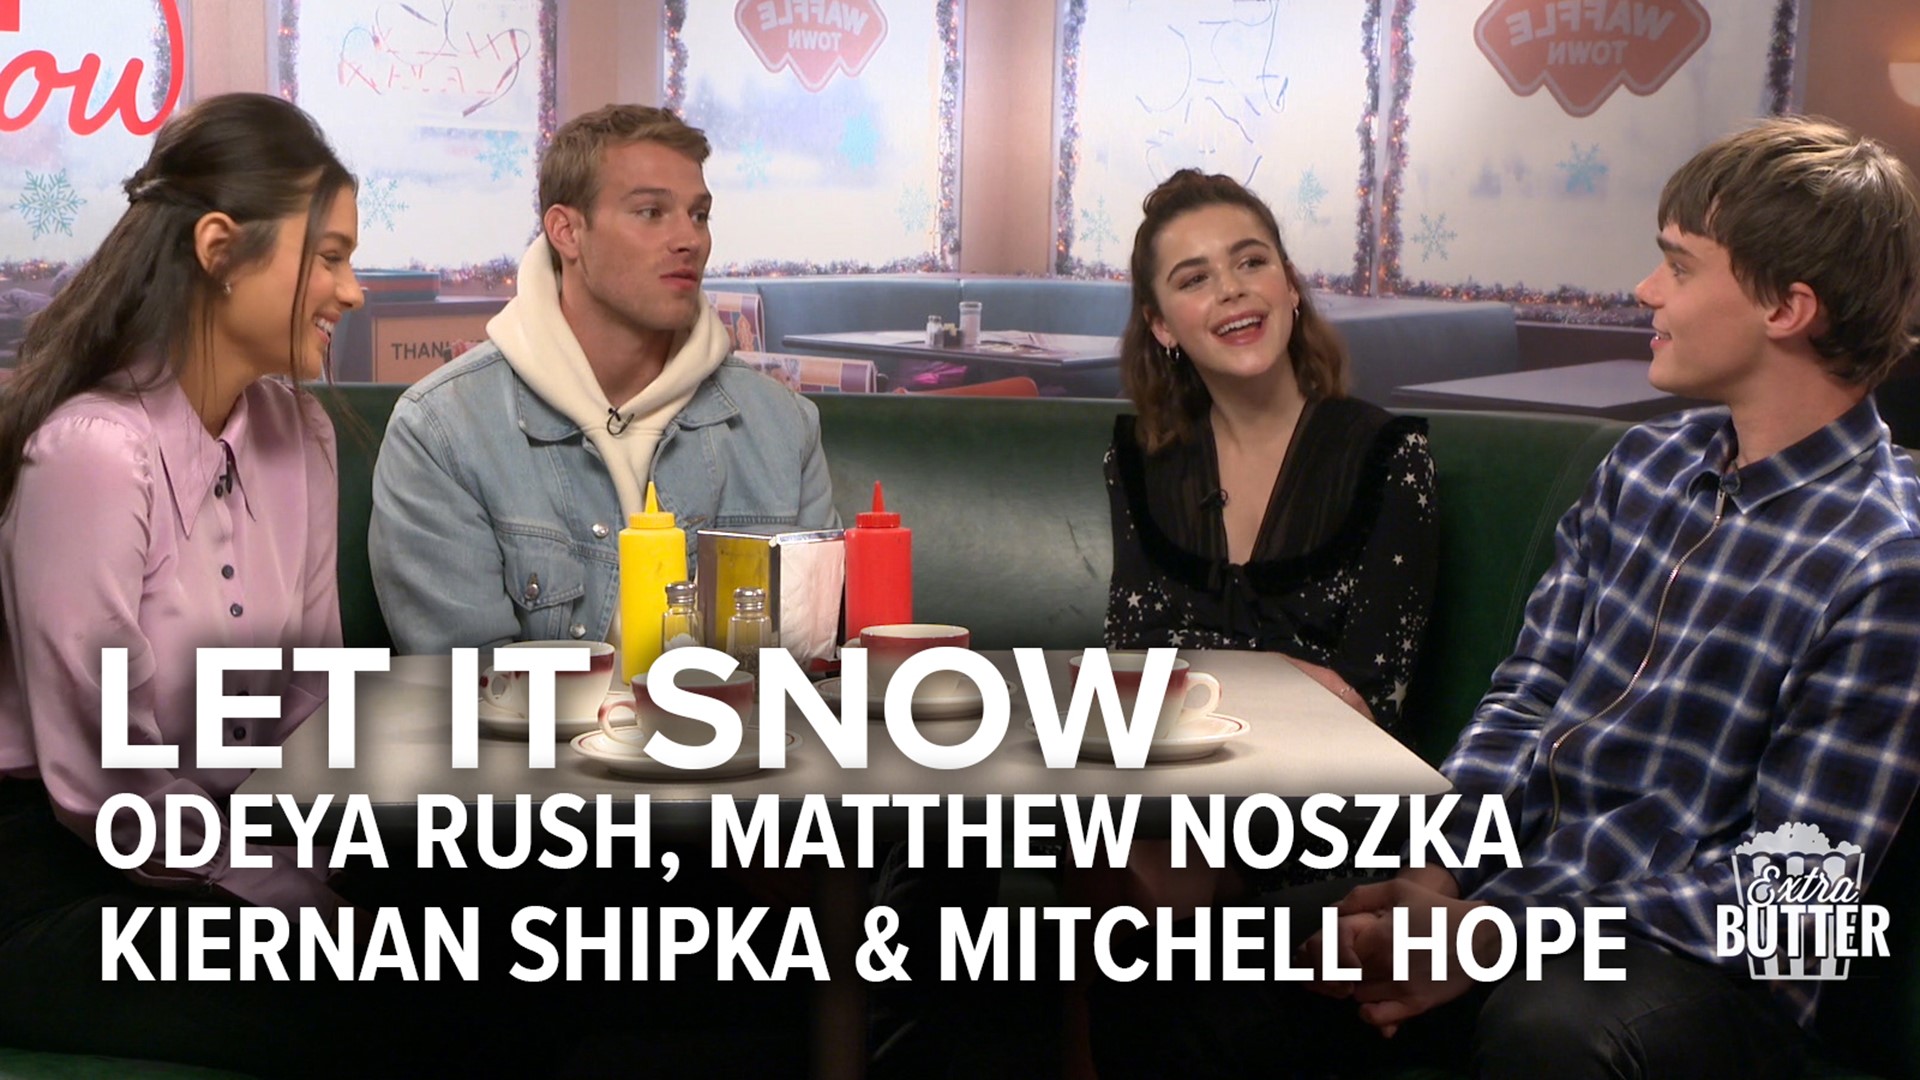 Hear from the stars of the new Netflix movie 'Let it Snow.' Kiernan Shipka, Mitchell Hope, Odeya Rush, and Matthew Noszka talk about big romantic gestures.